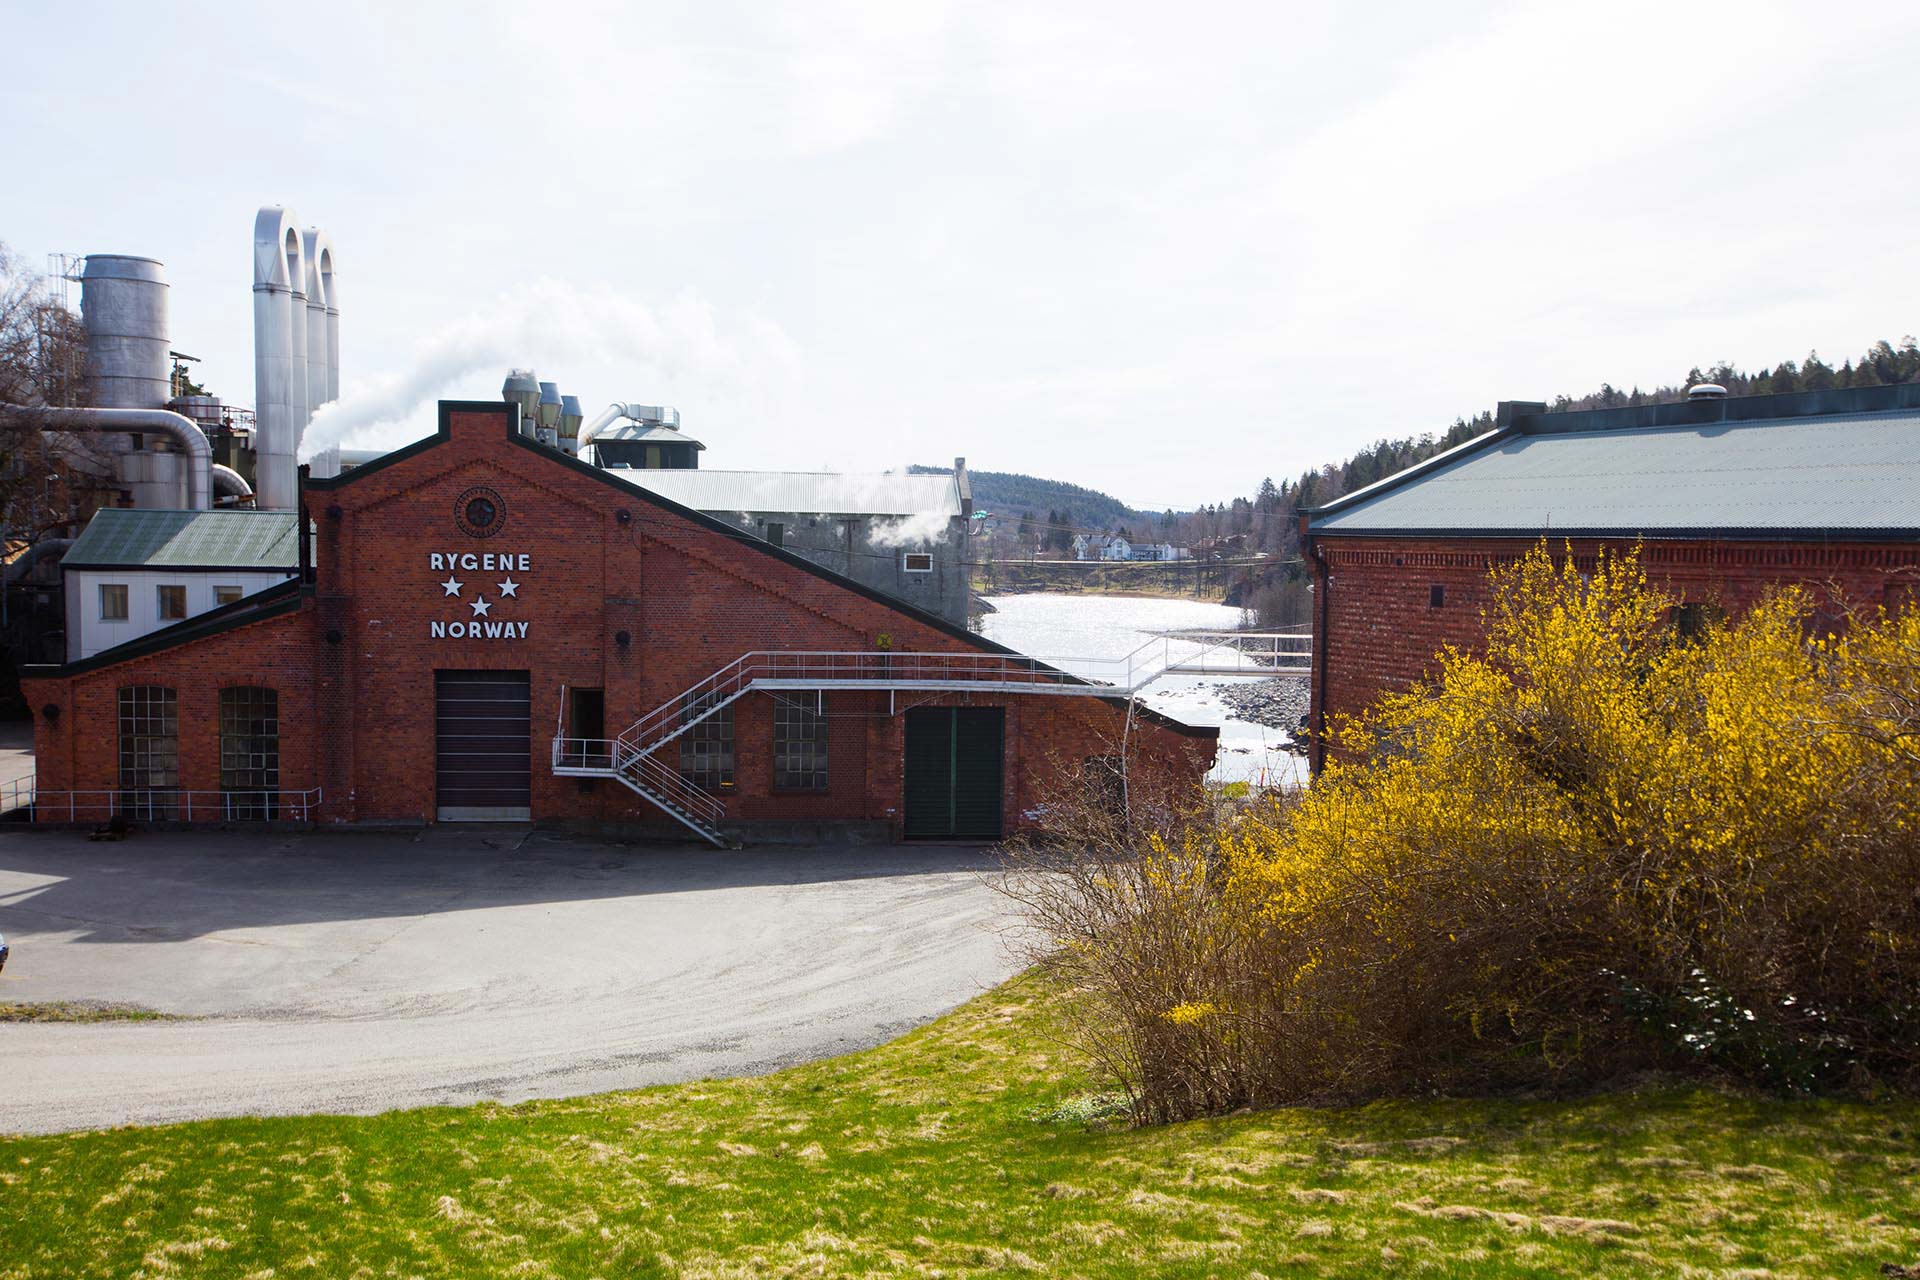 Mill since 1883